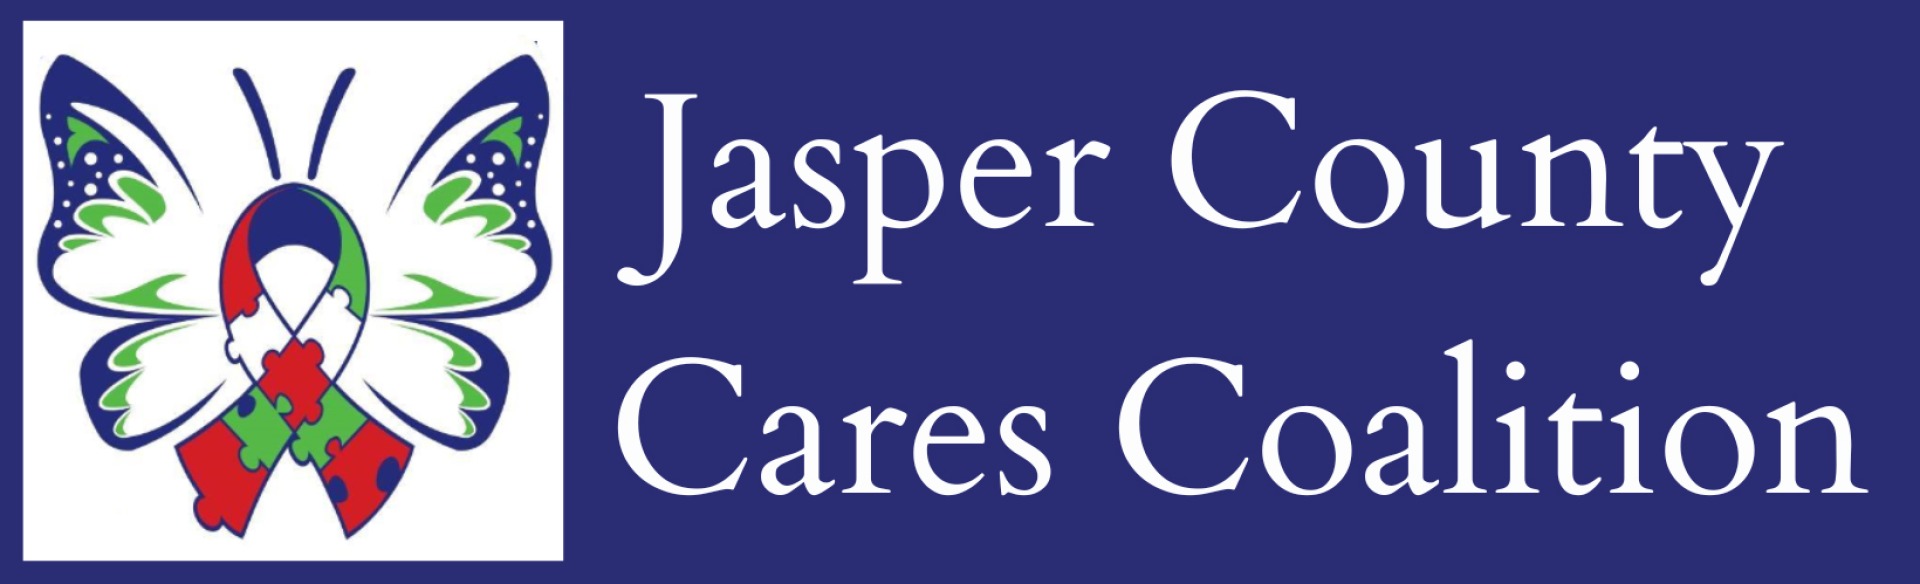 Jasper County Cares